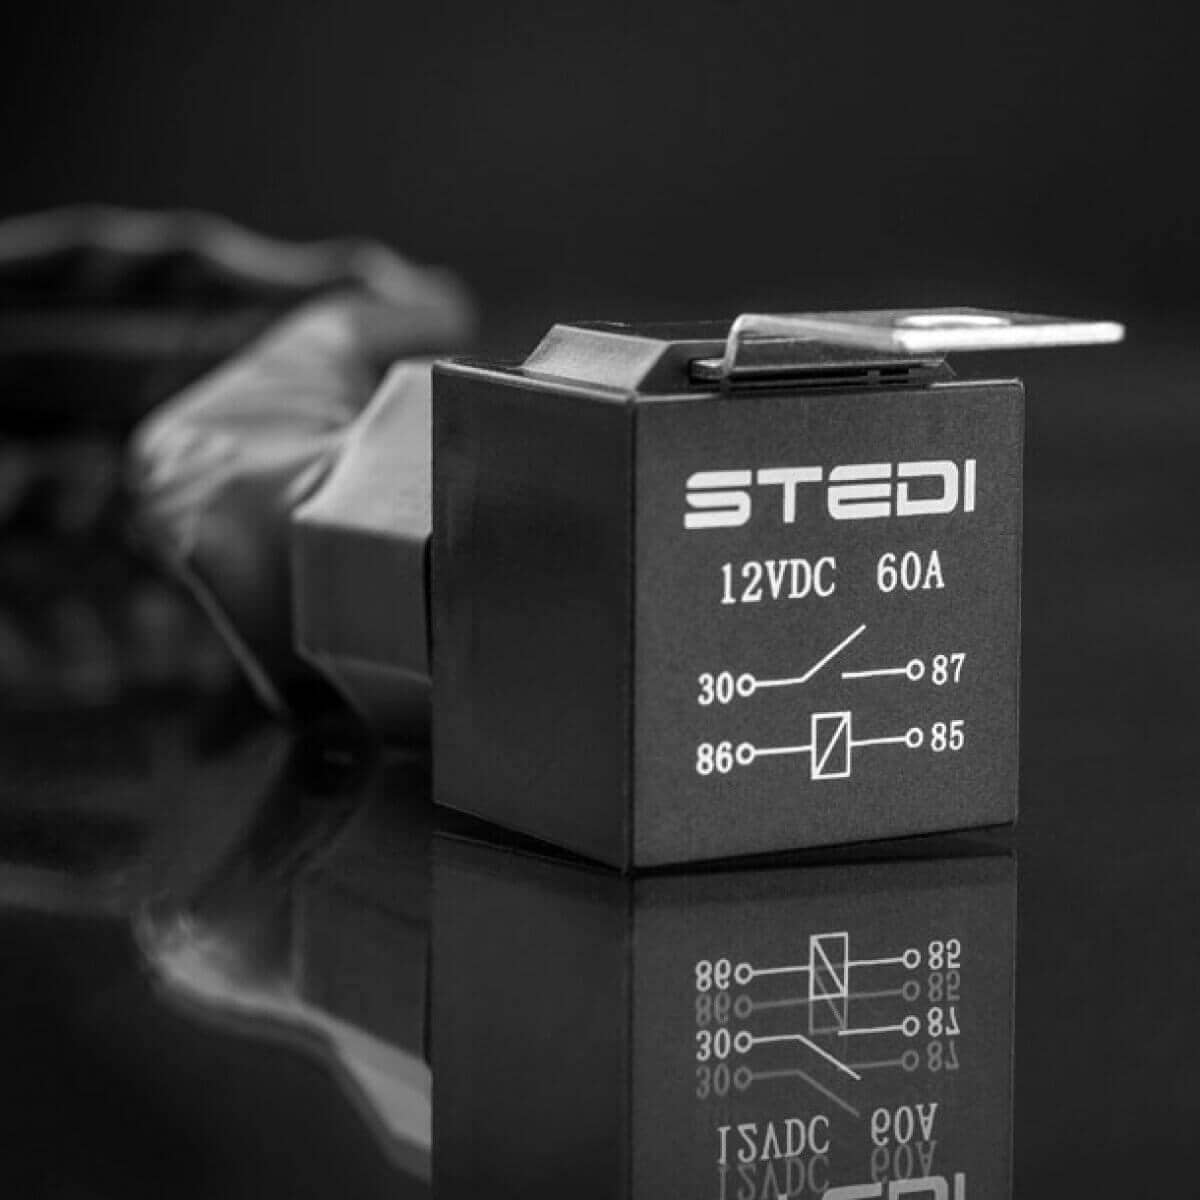 STEDI LED Work Light Wiring Kit Loom Harness (Not high beam triggered) - NZ Offroader